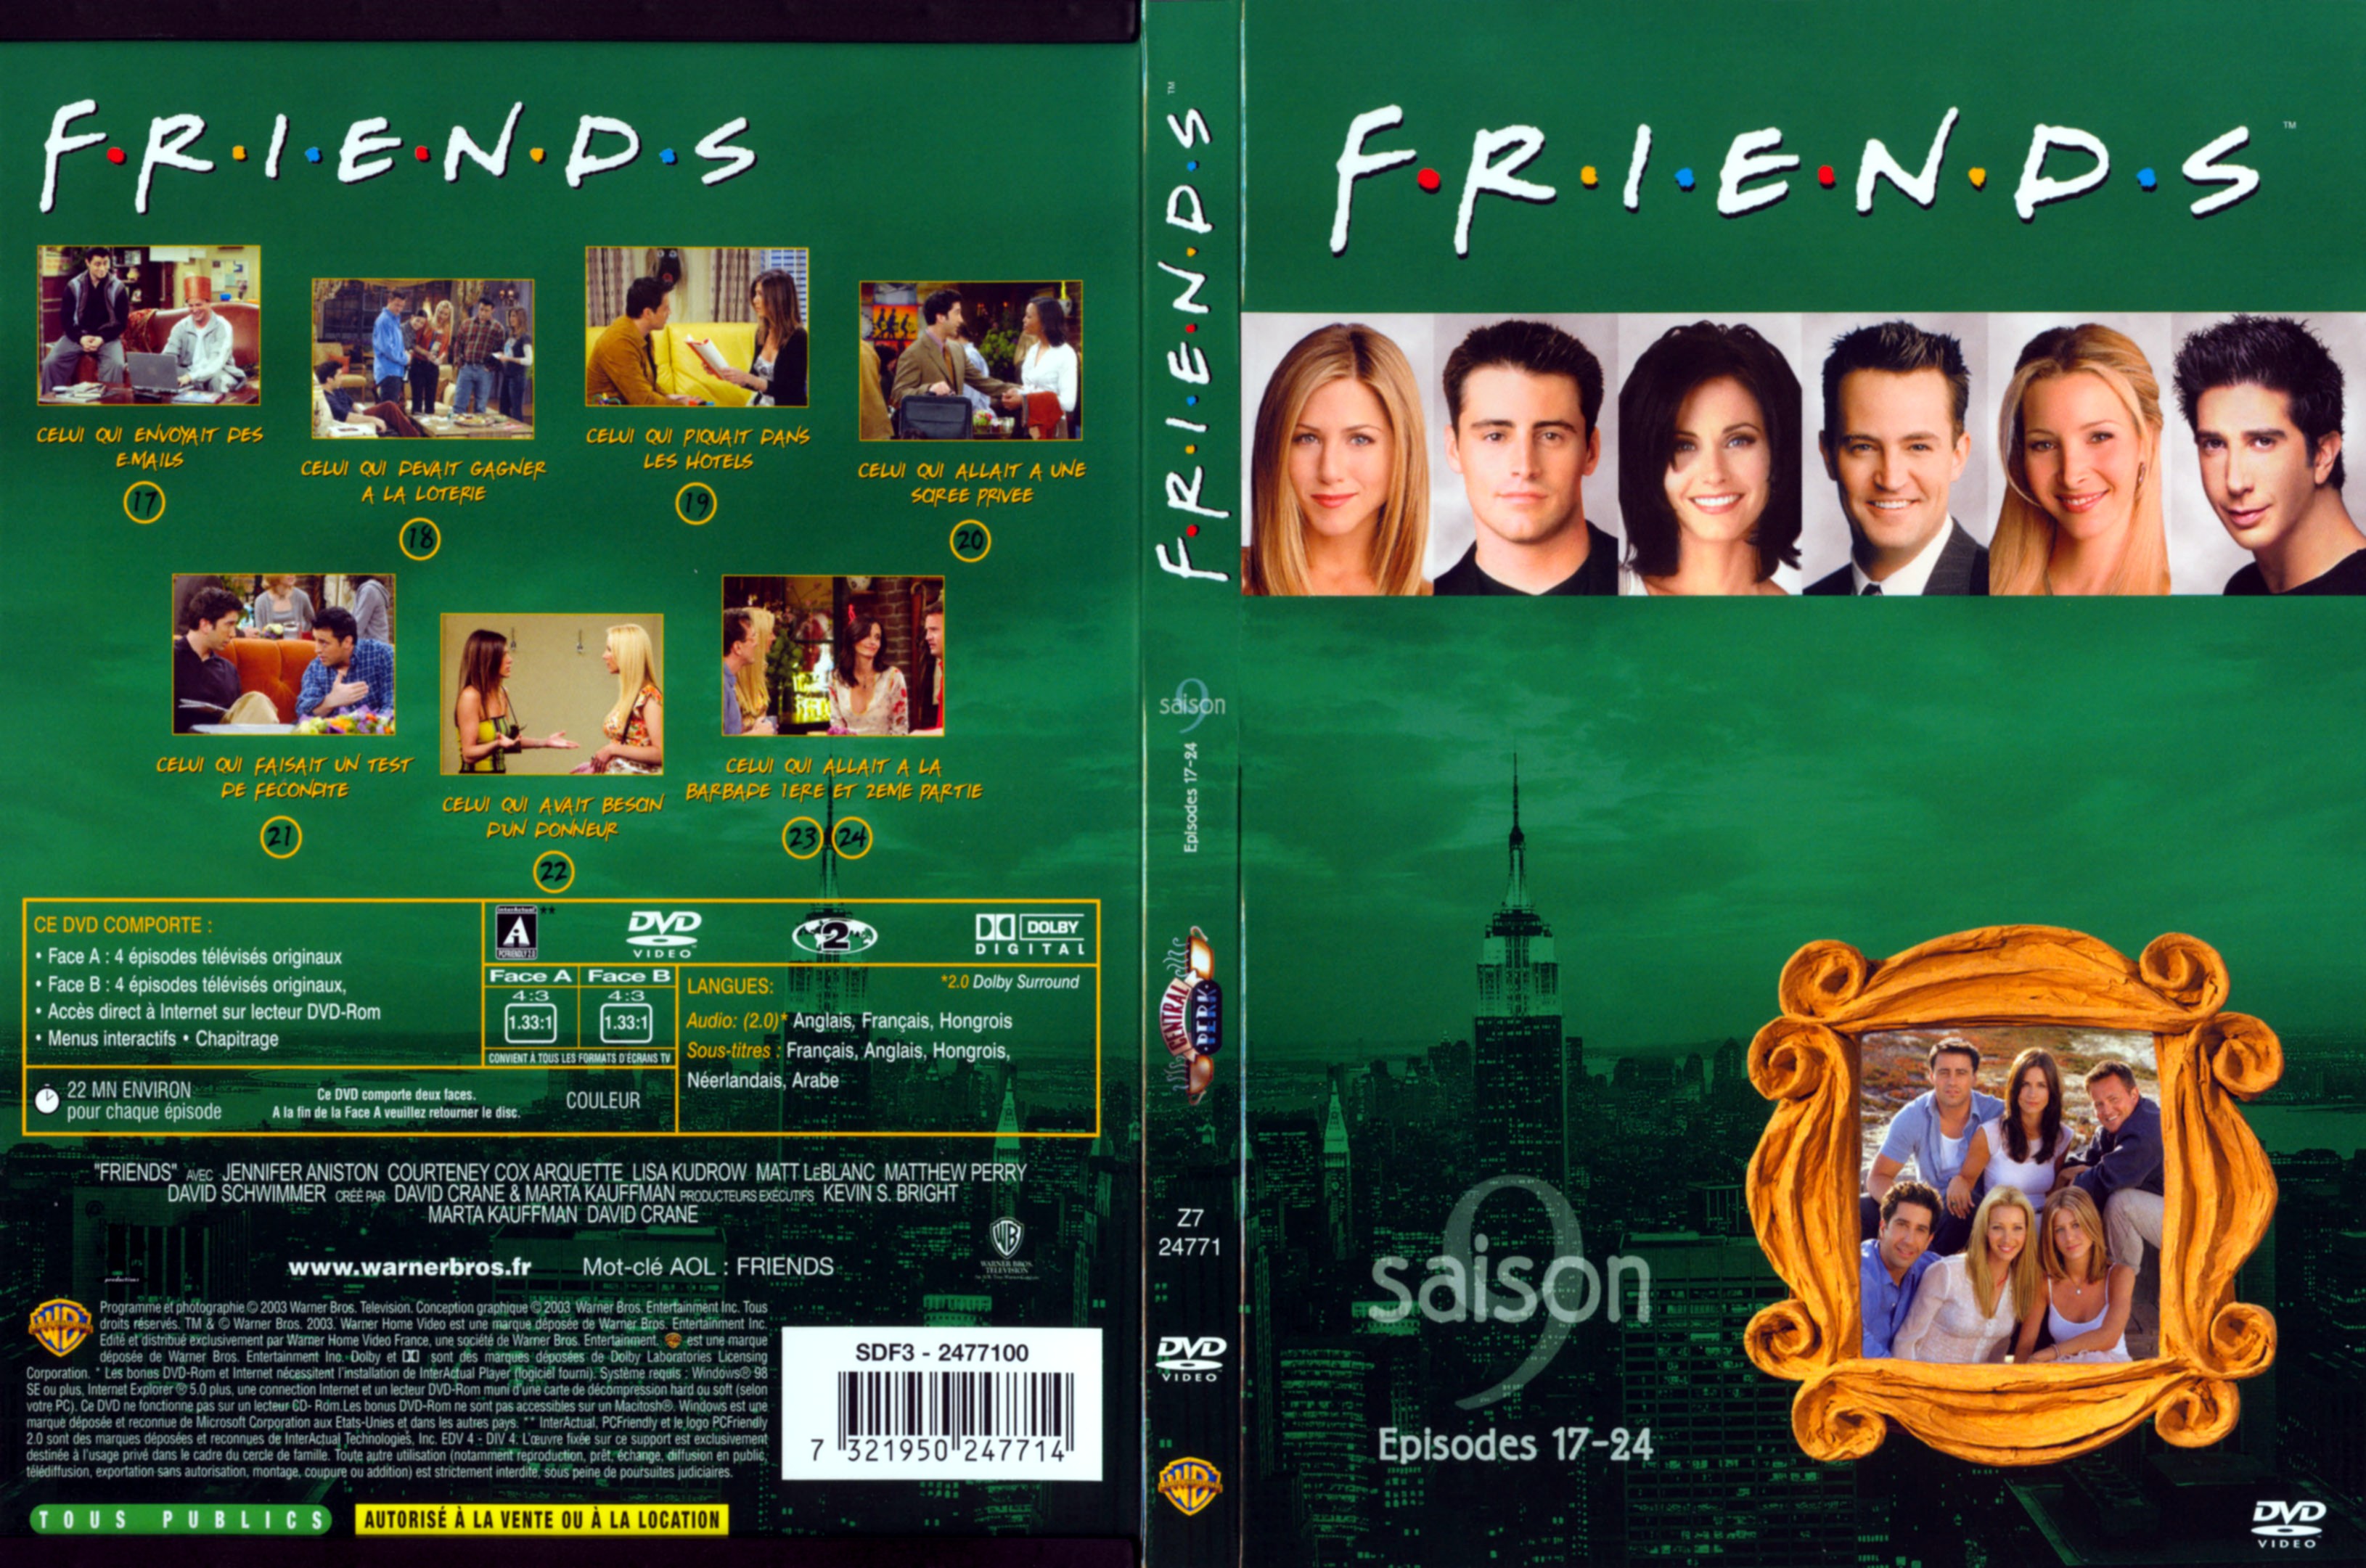 Jaquette DVD Friends saison 9 dvd 3